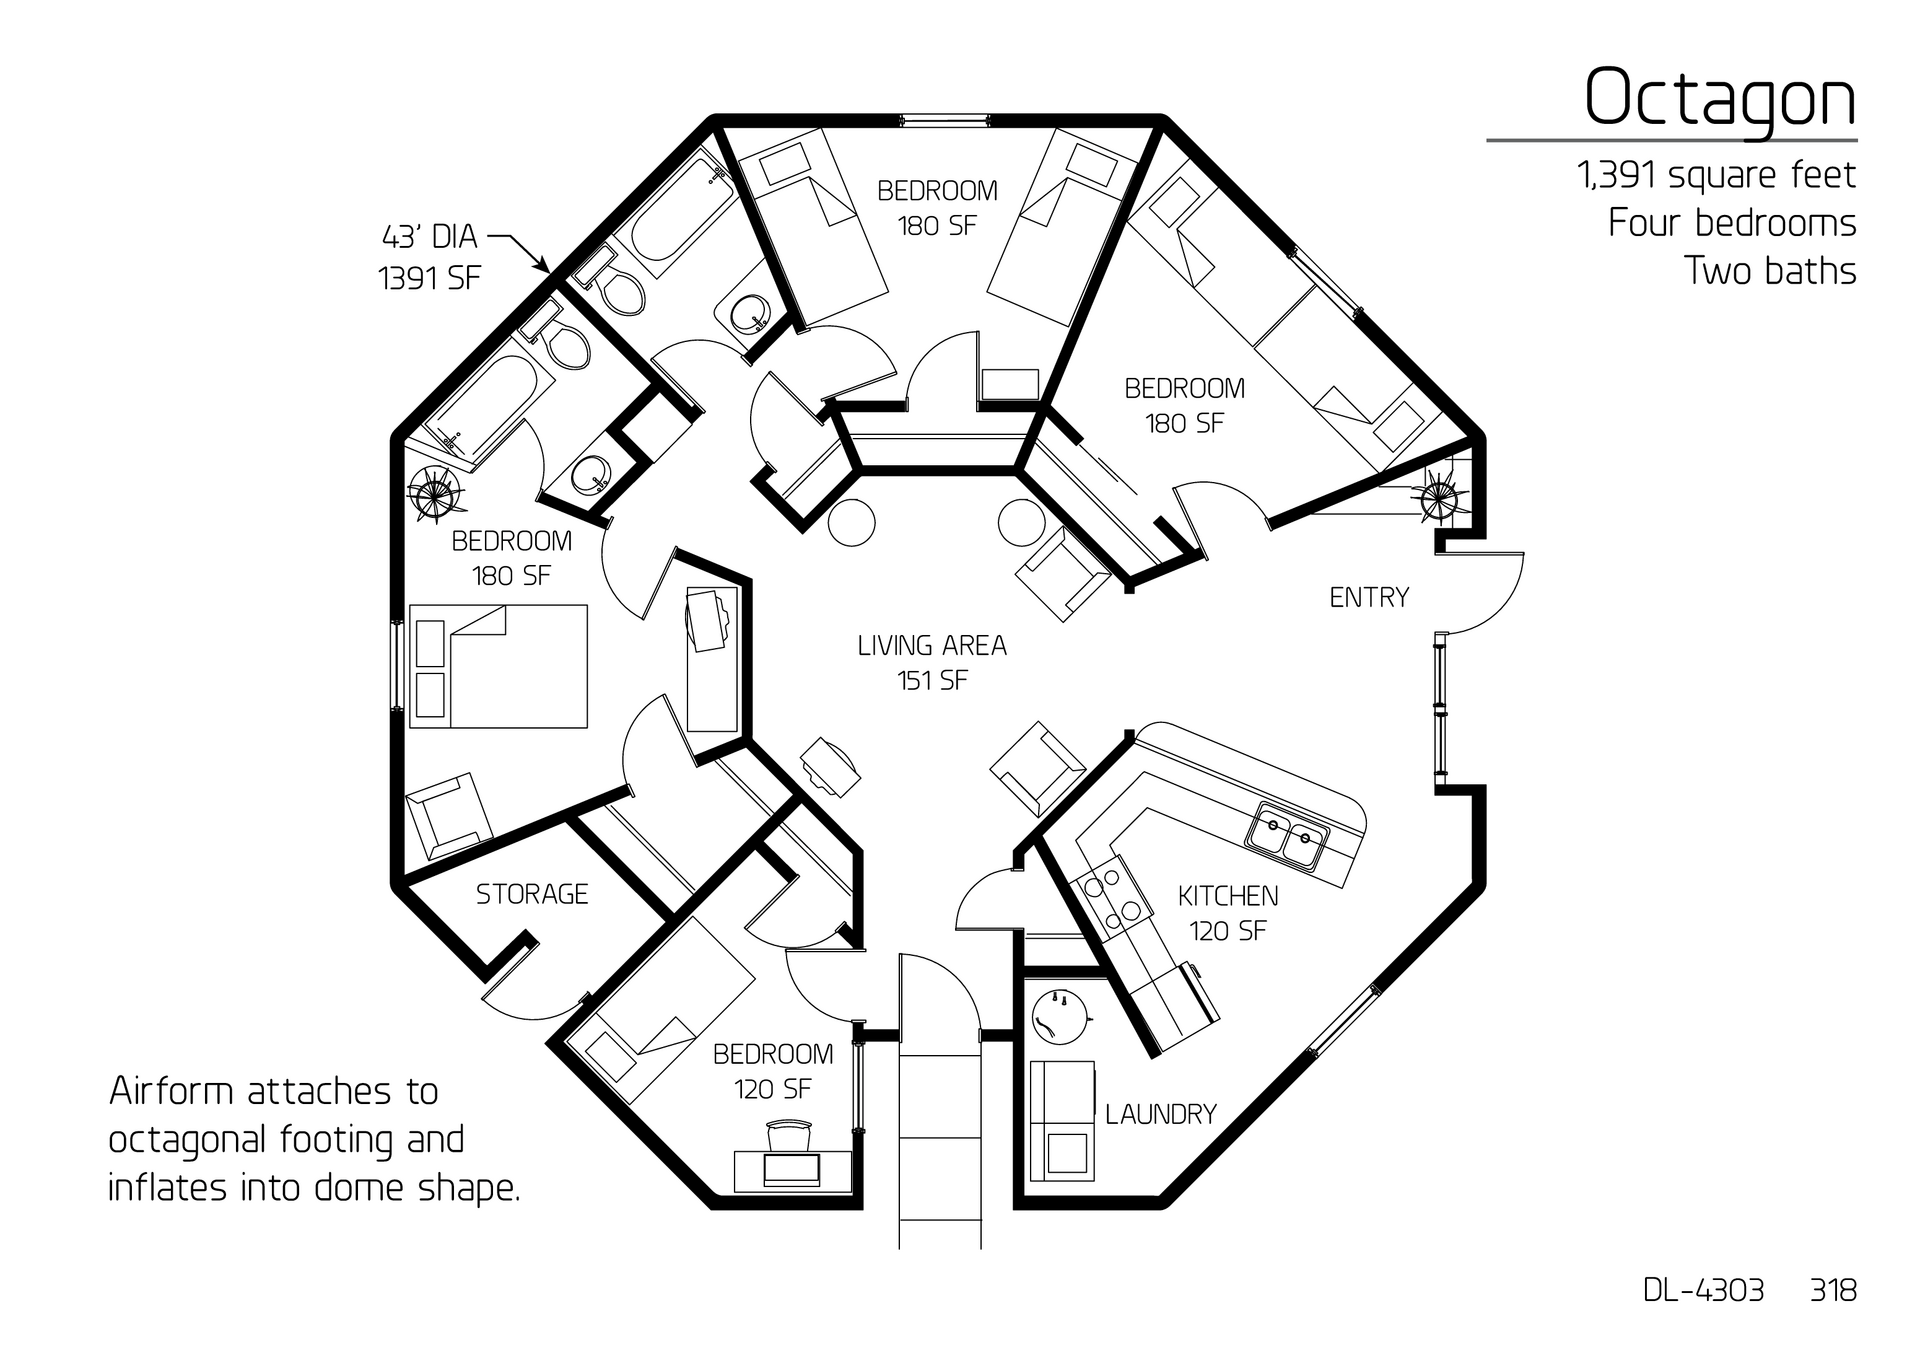 Octagon: 43' Diameter, 1,391 SF, Four-Bedroom, Two-Bath Floor Plan.